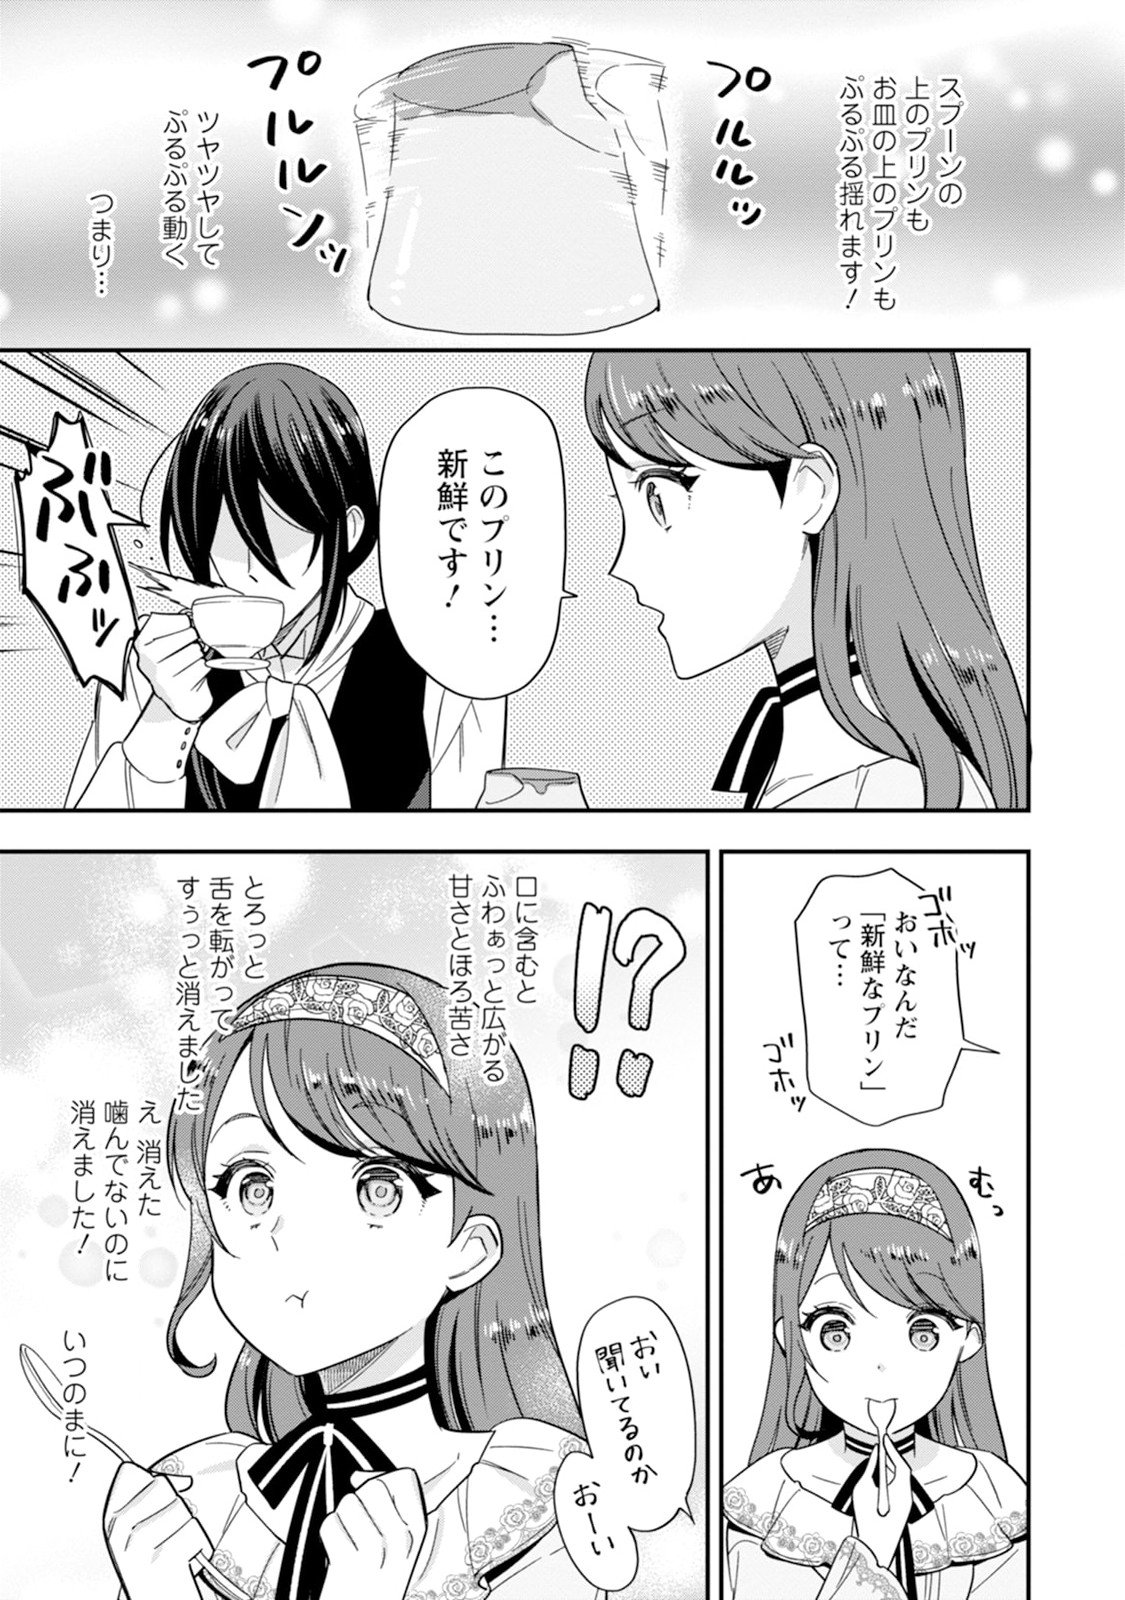 Aisanai to Iwaremashite mo - Chapter 2 - Page 5